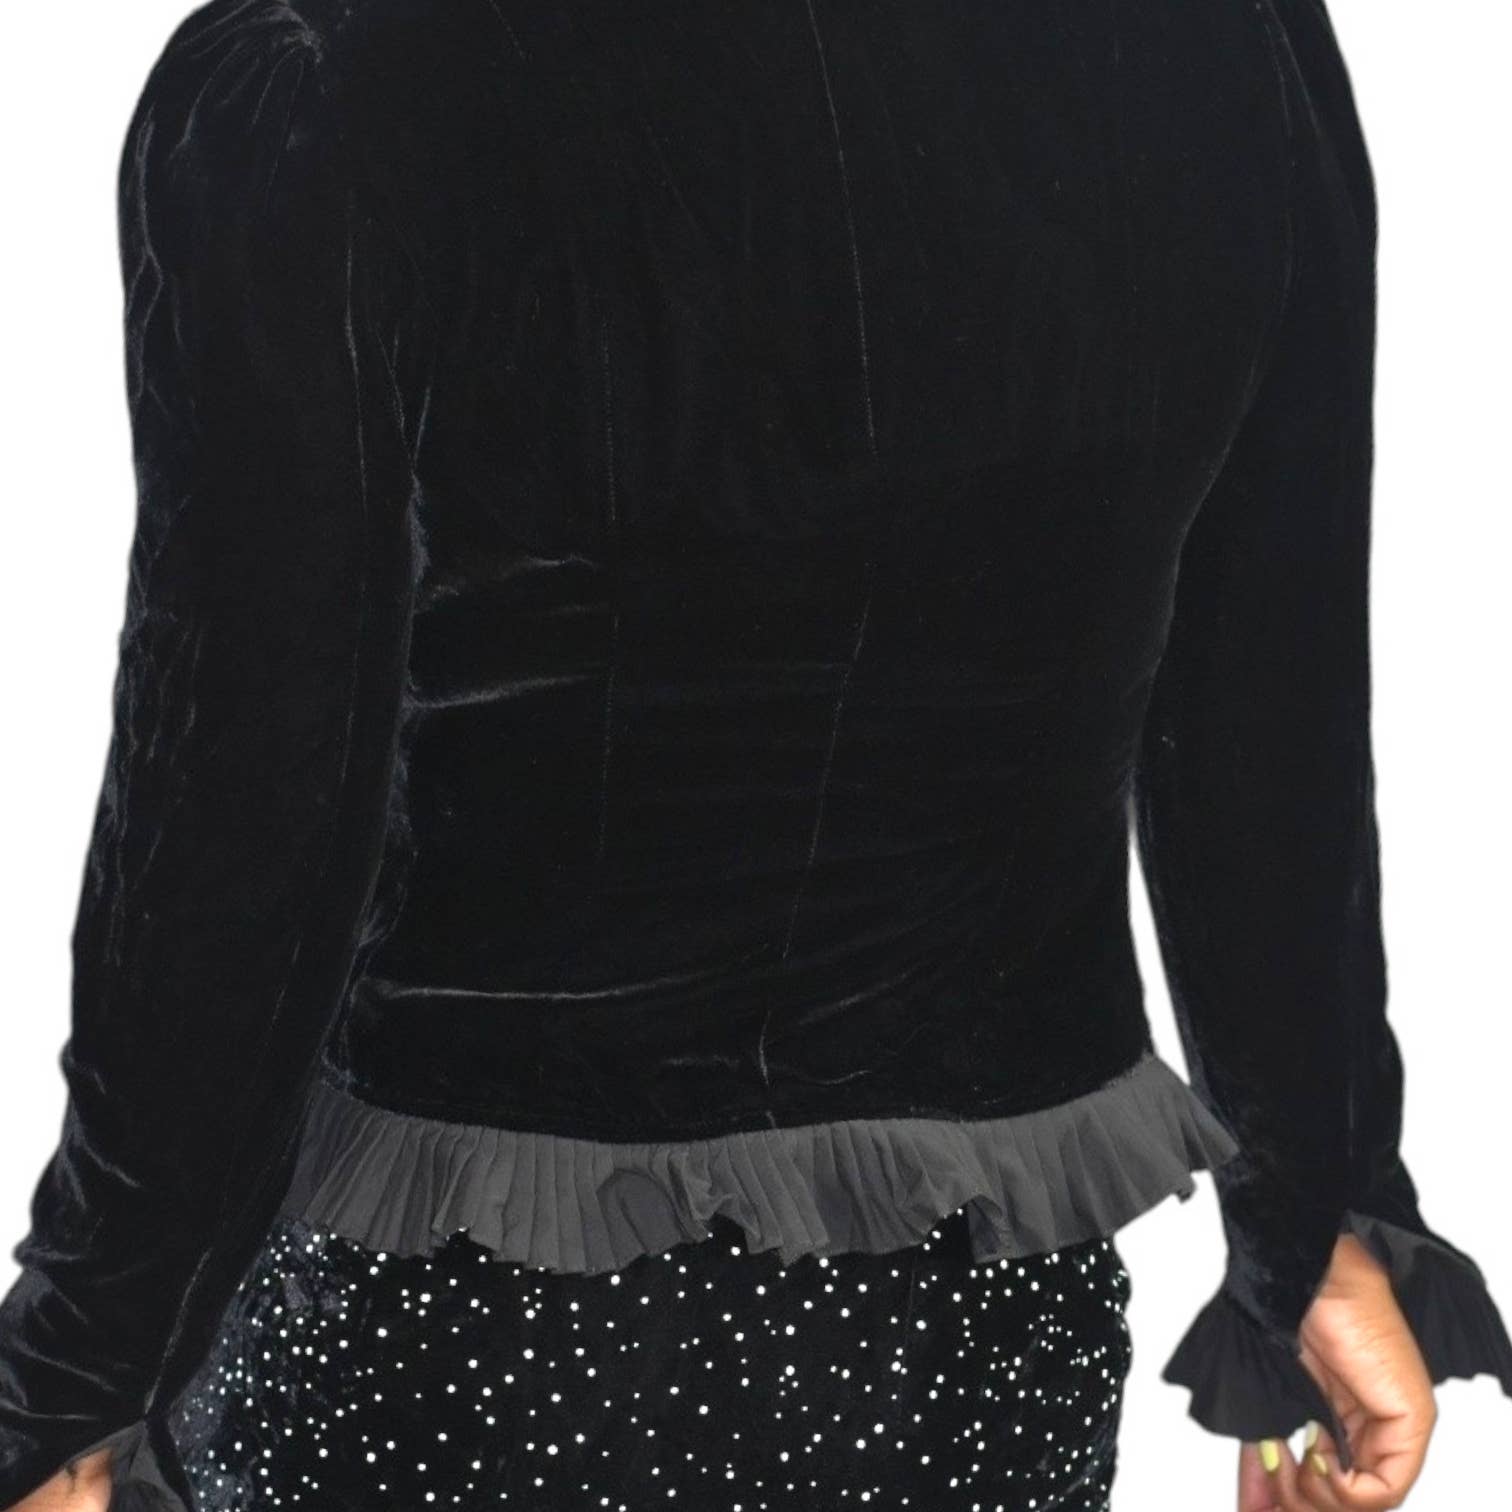 Betsey Johnson Velvet Jacket Black Blazer Ruffled Puff Sleeve Victorian Y2K Size Small